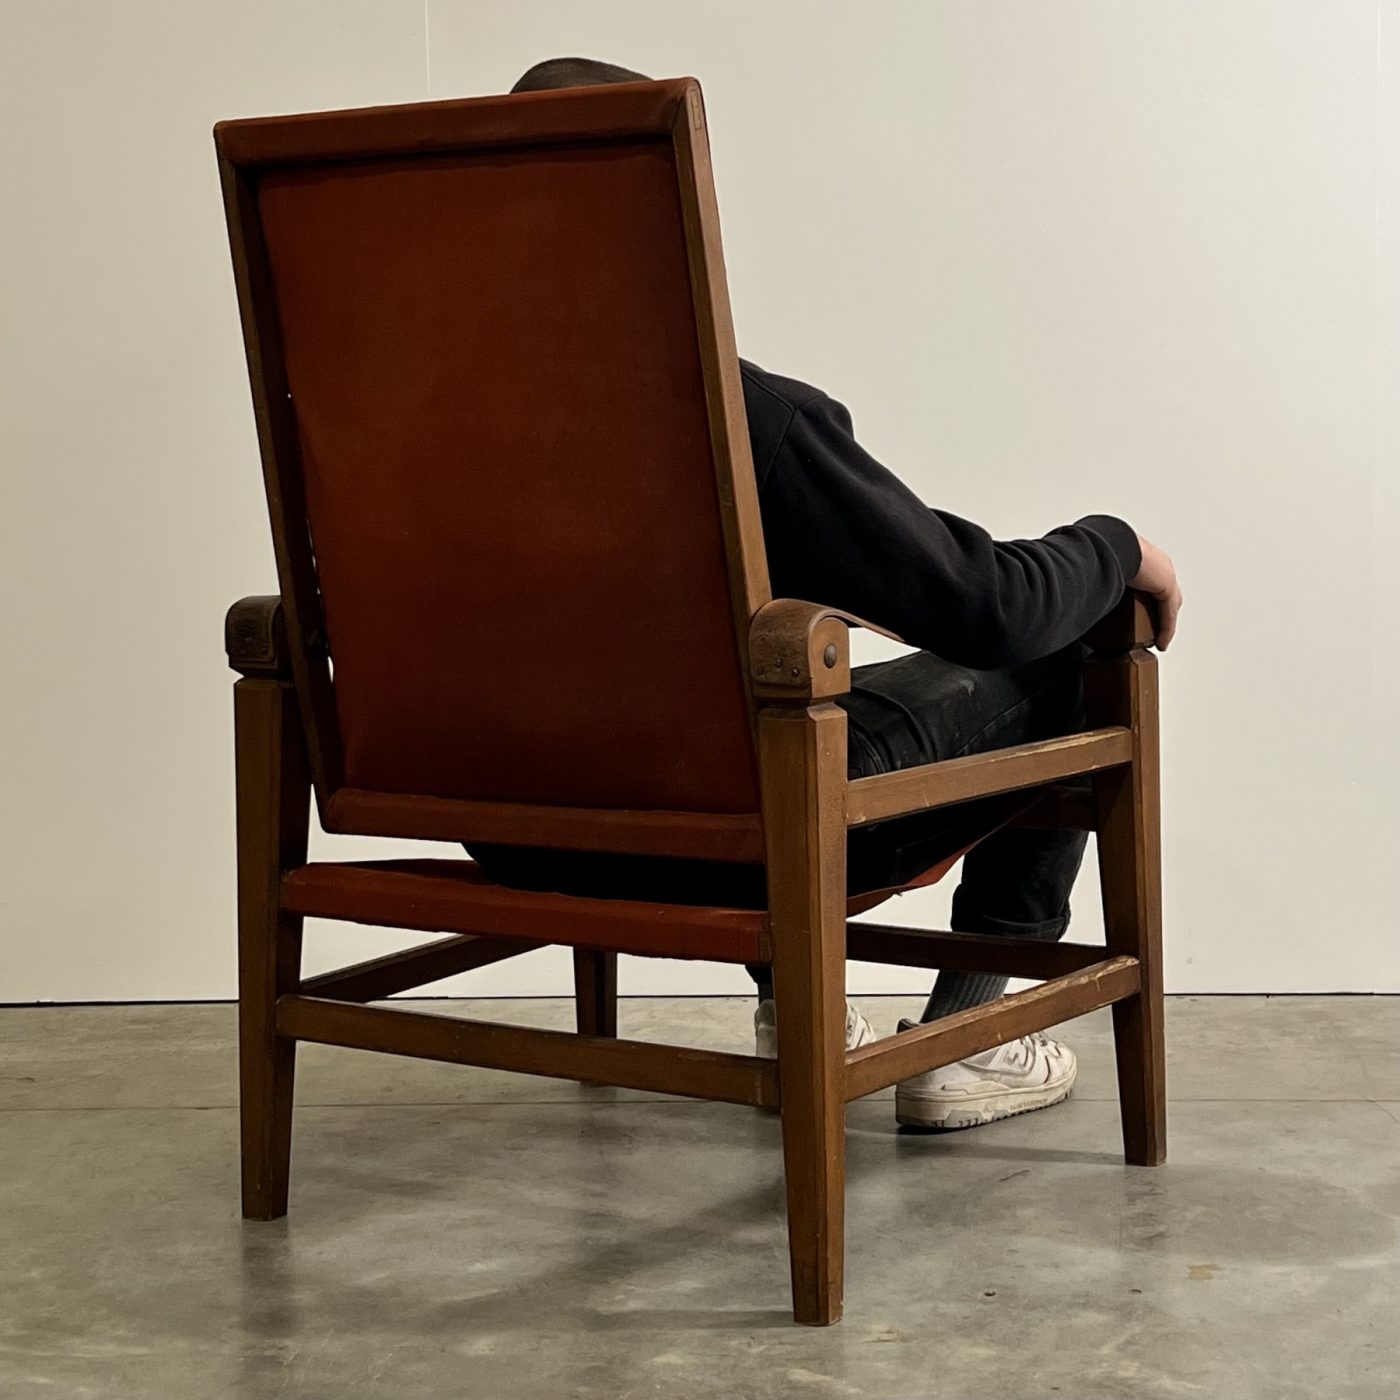 objet-vagabond-leather-armchair0000